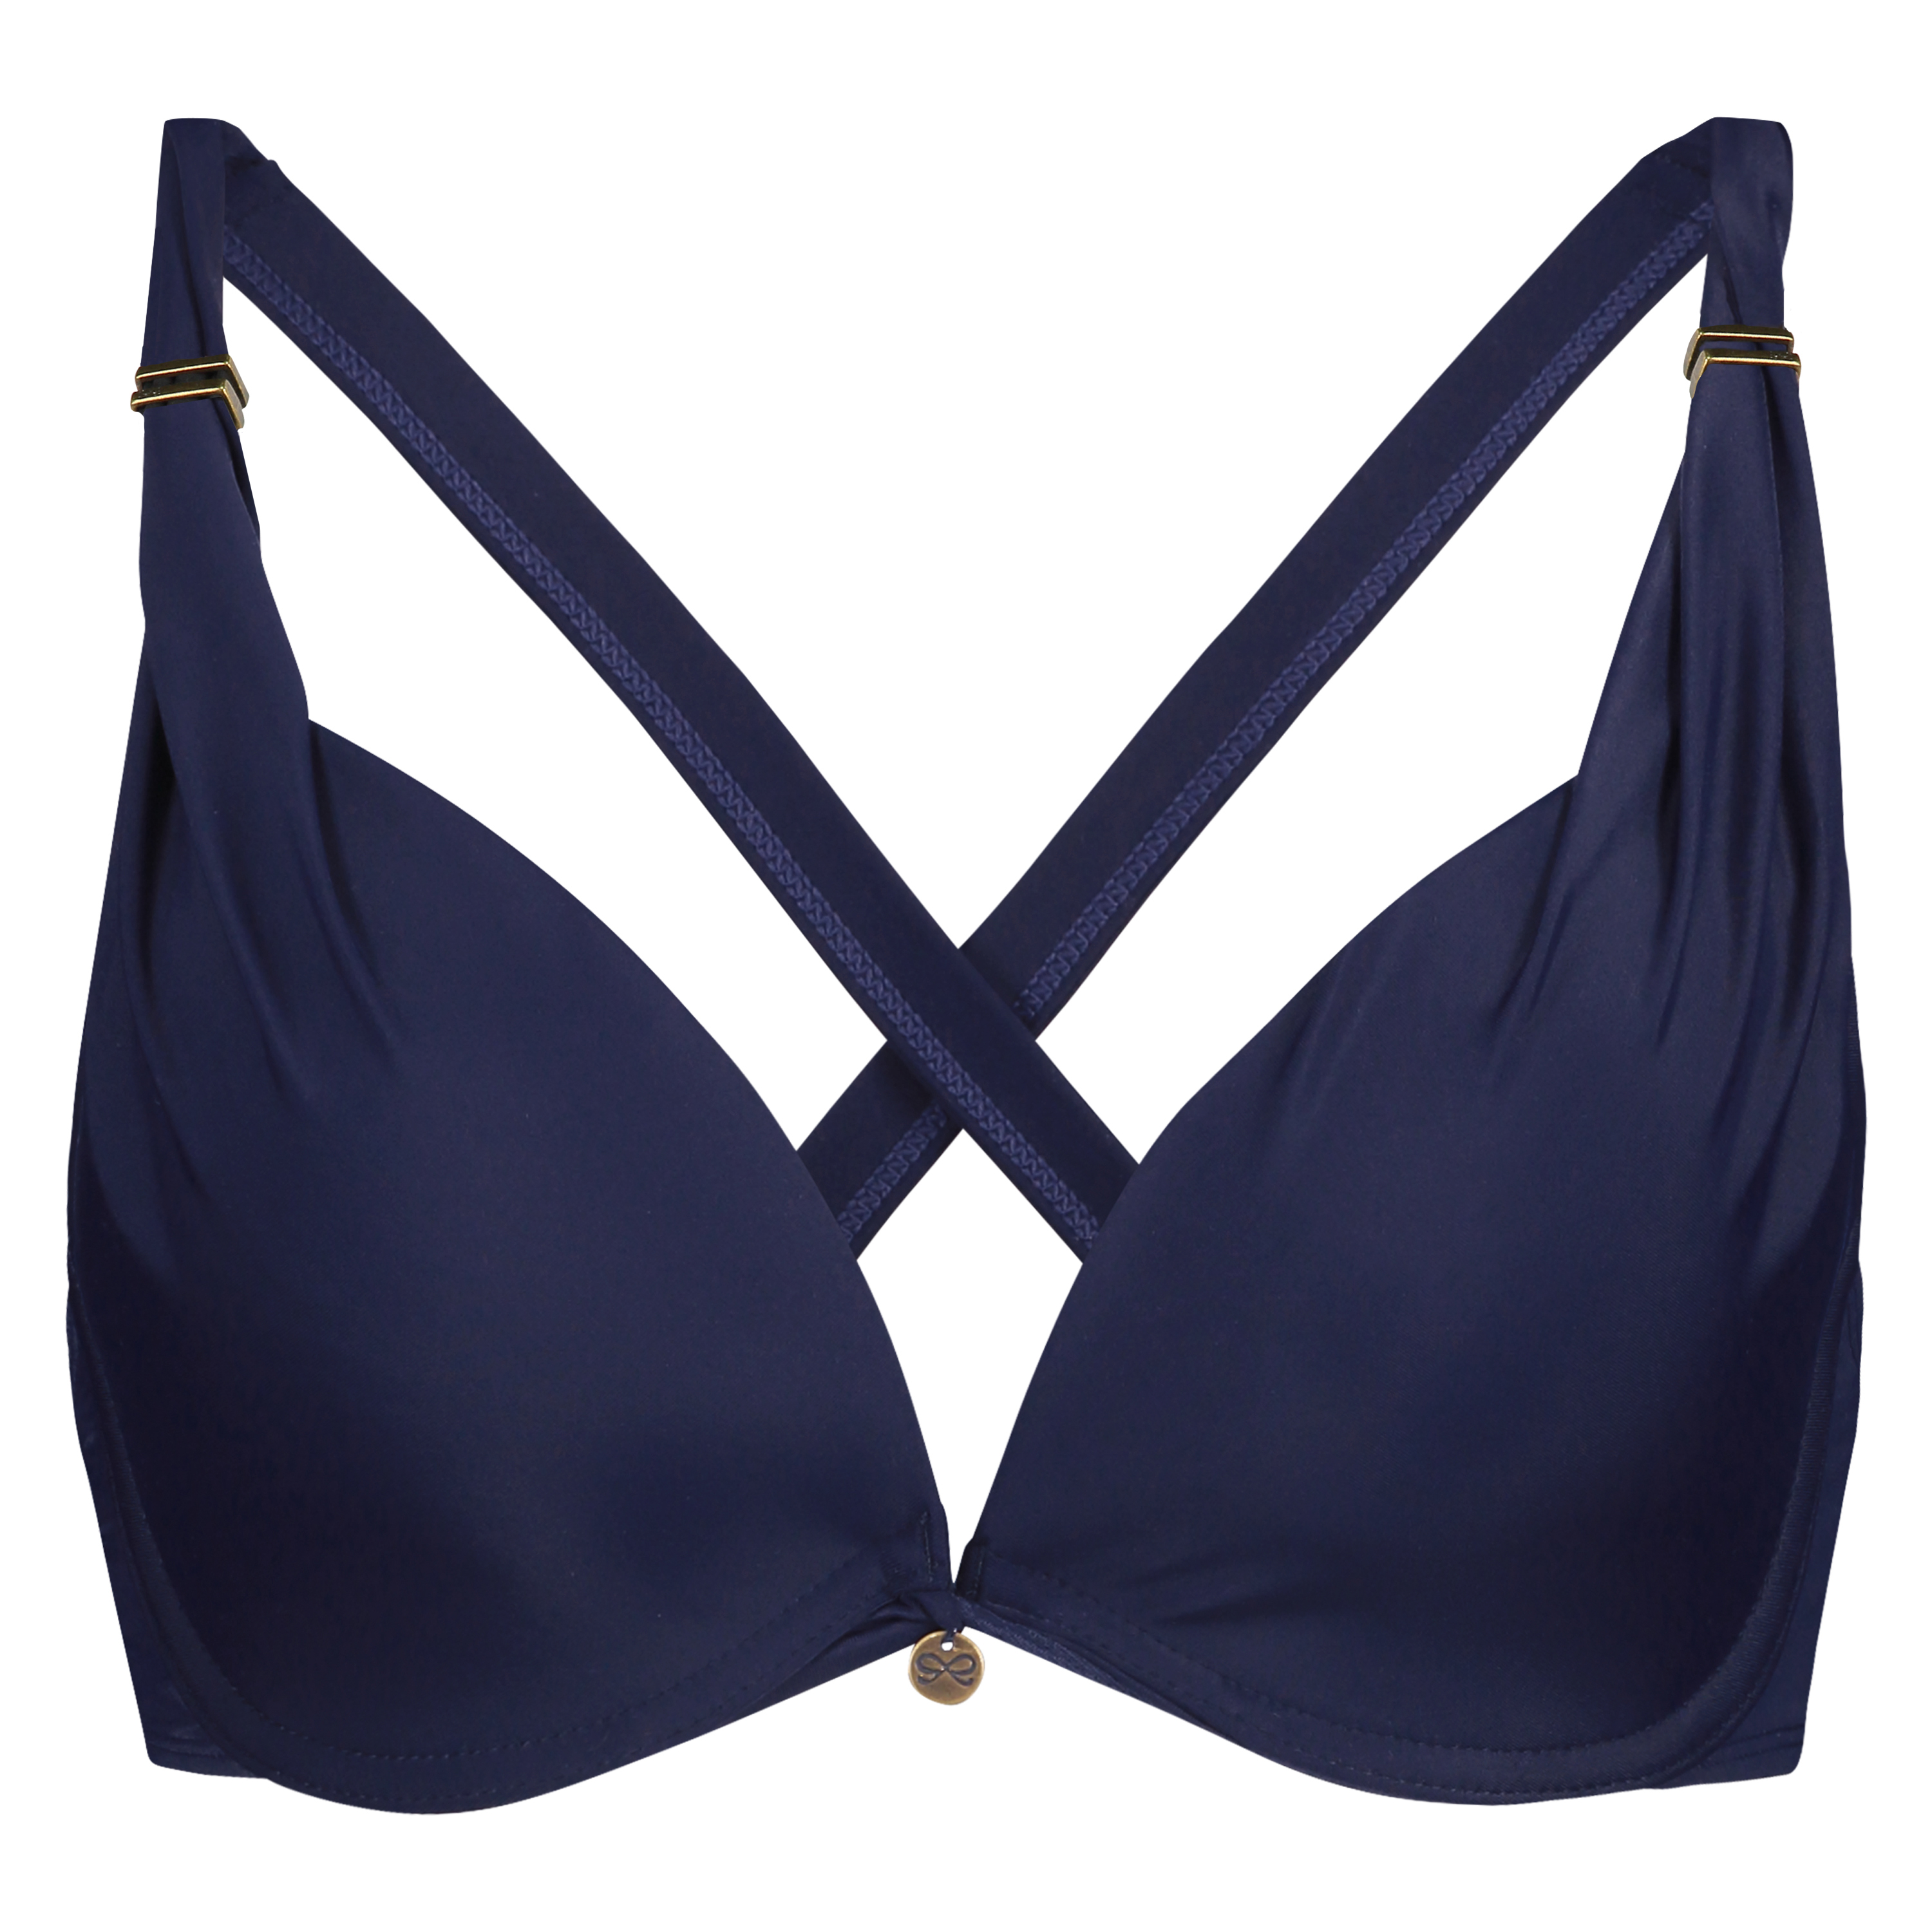 Vorgeformtes Bügel-Bikini-Top Sunset Dreams Cup E +, Blau, main